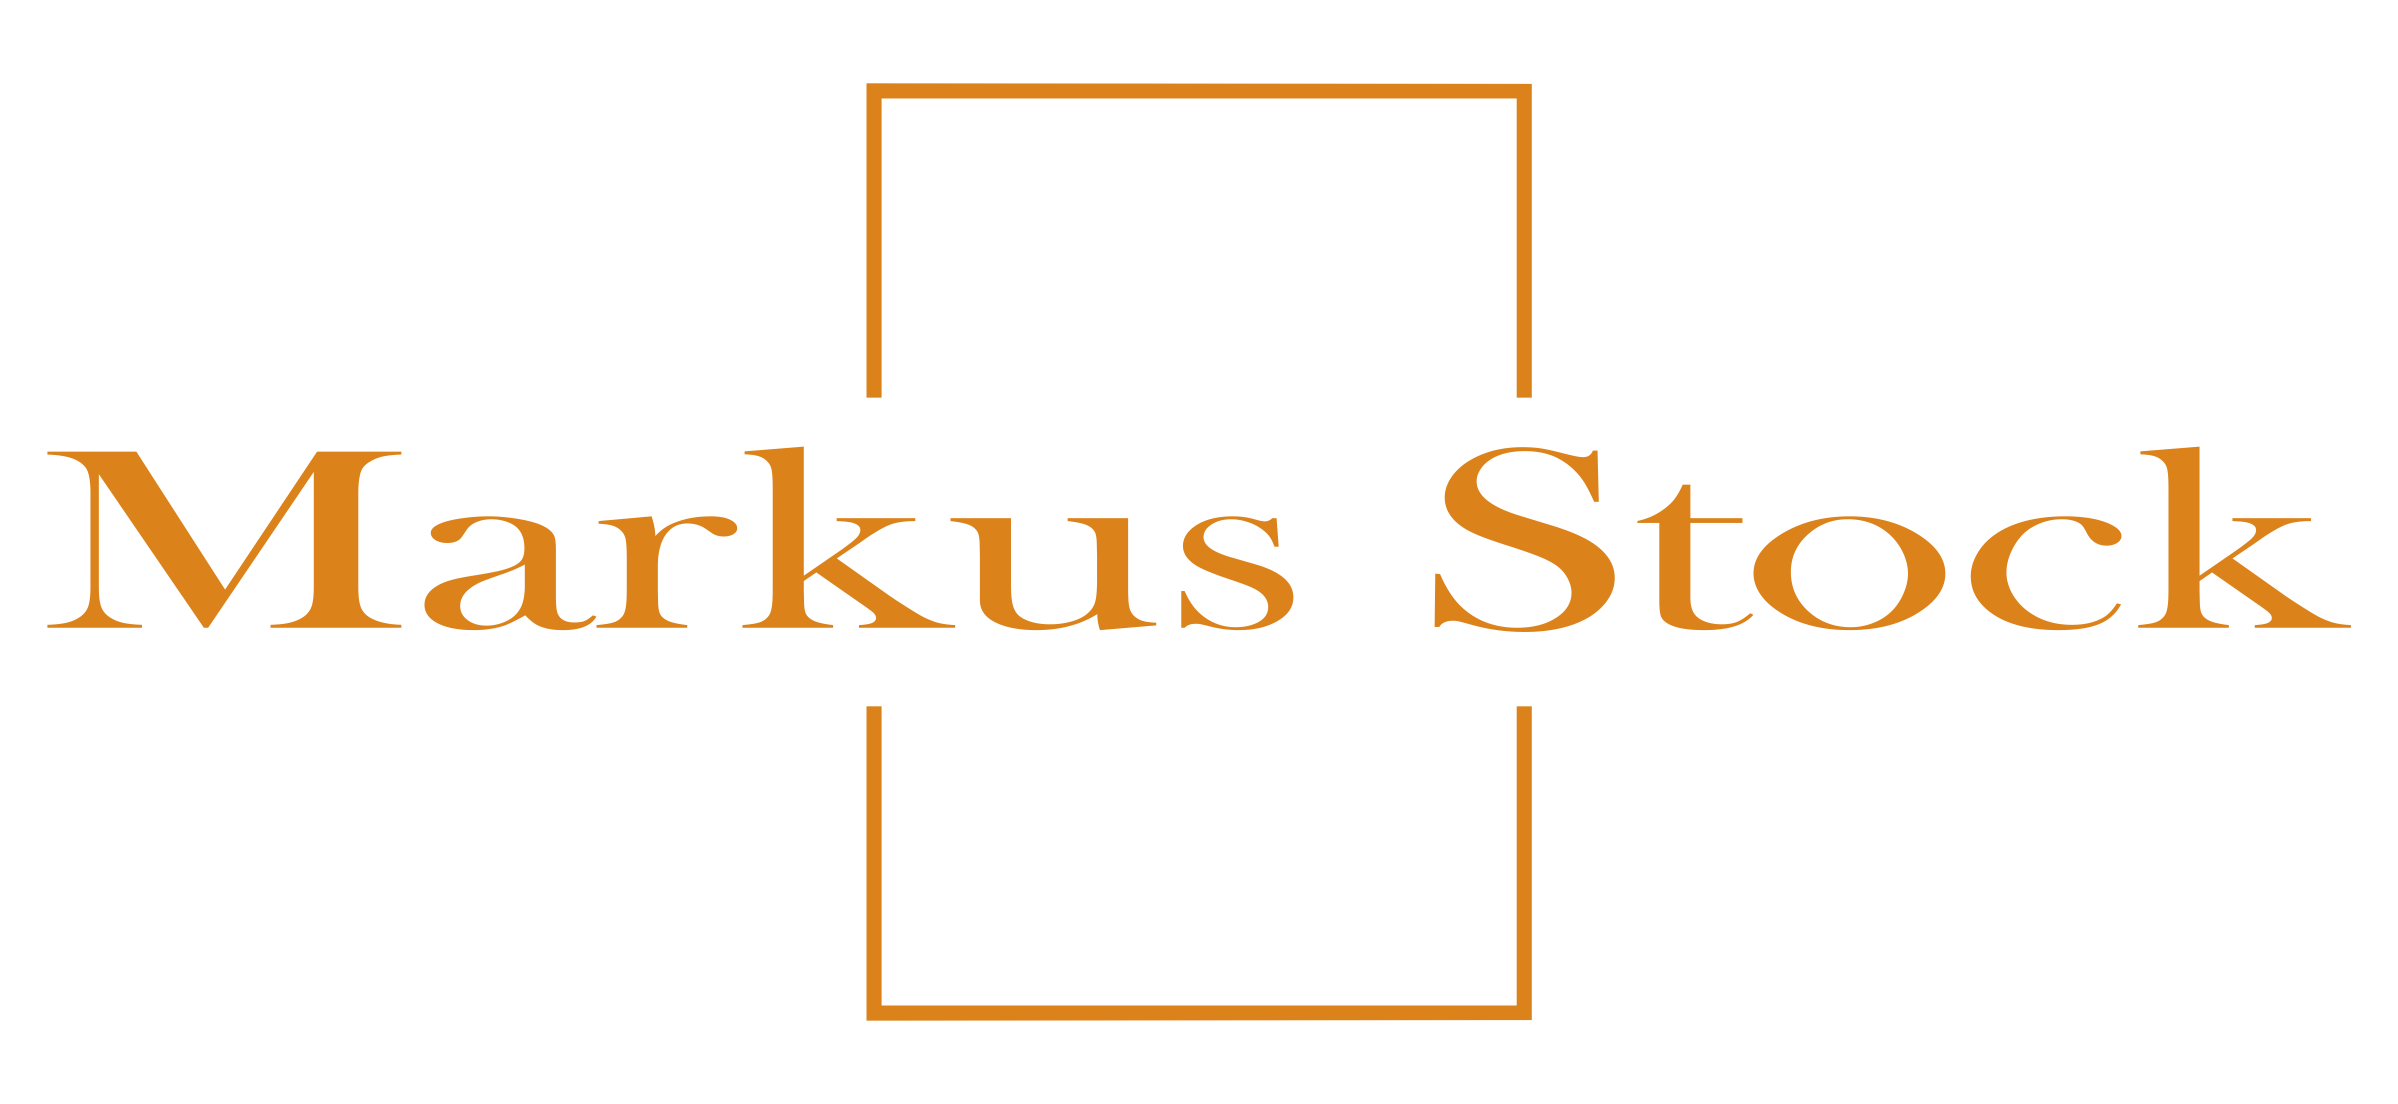 Markus Stock